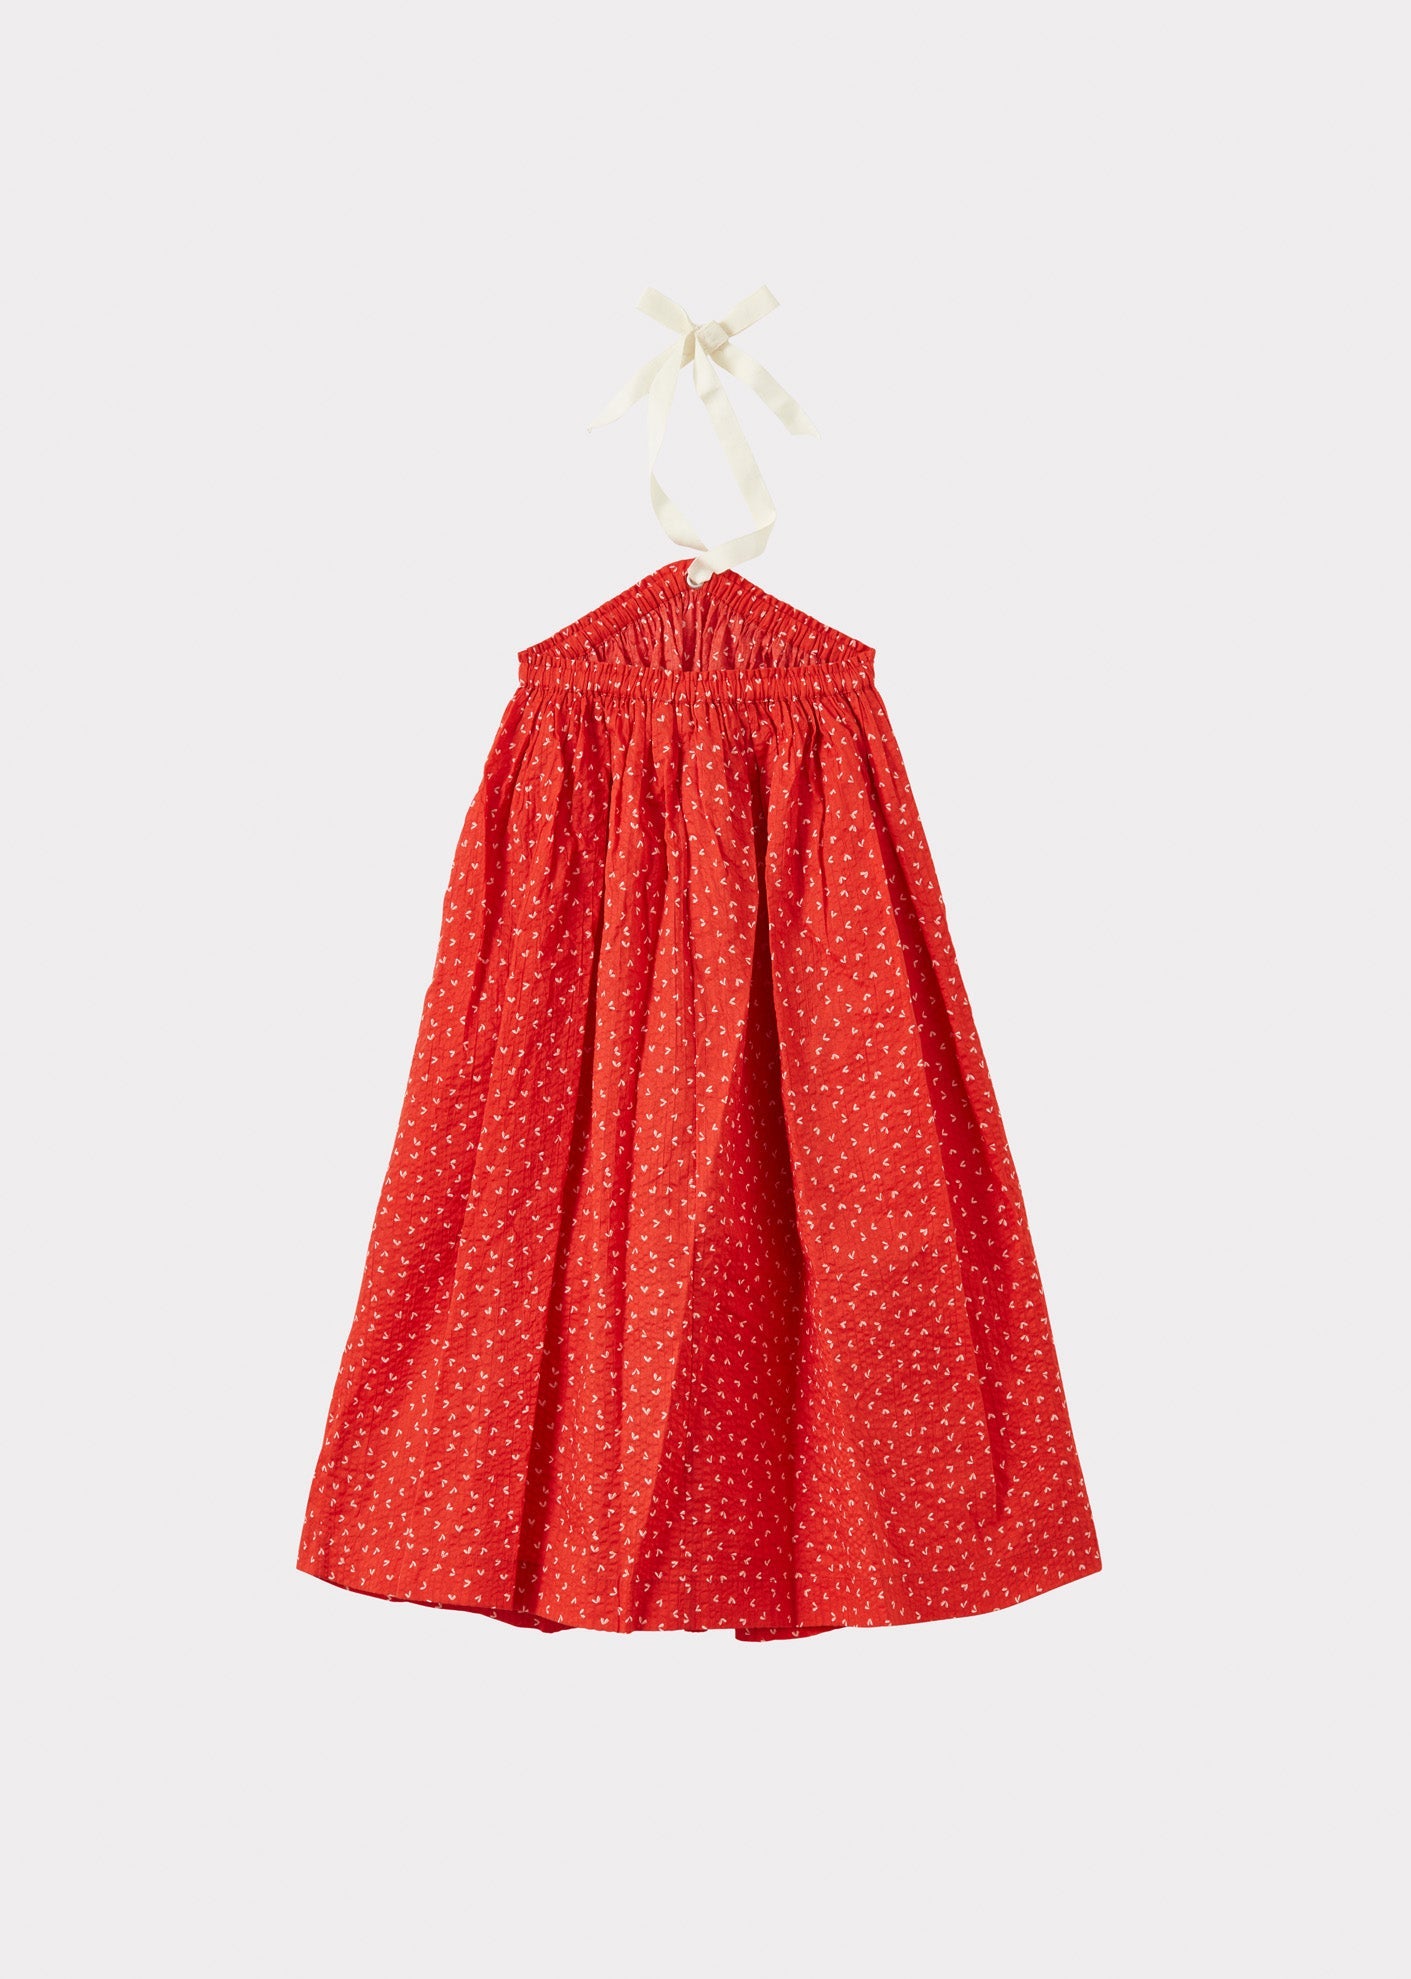 AGAVE DRESS - POPPY RED